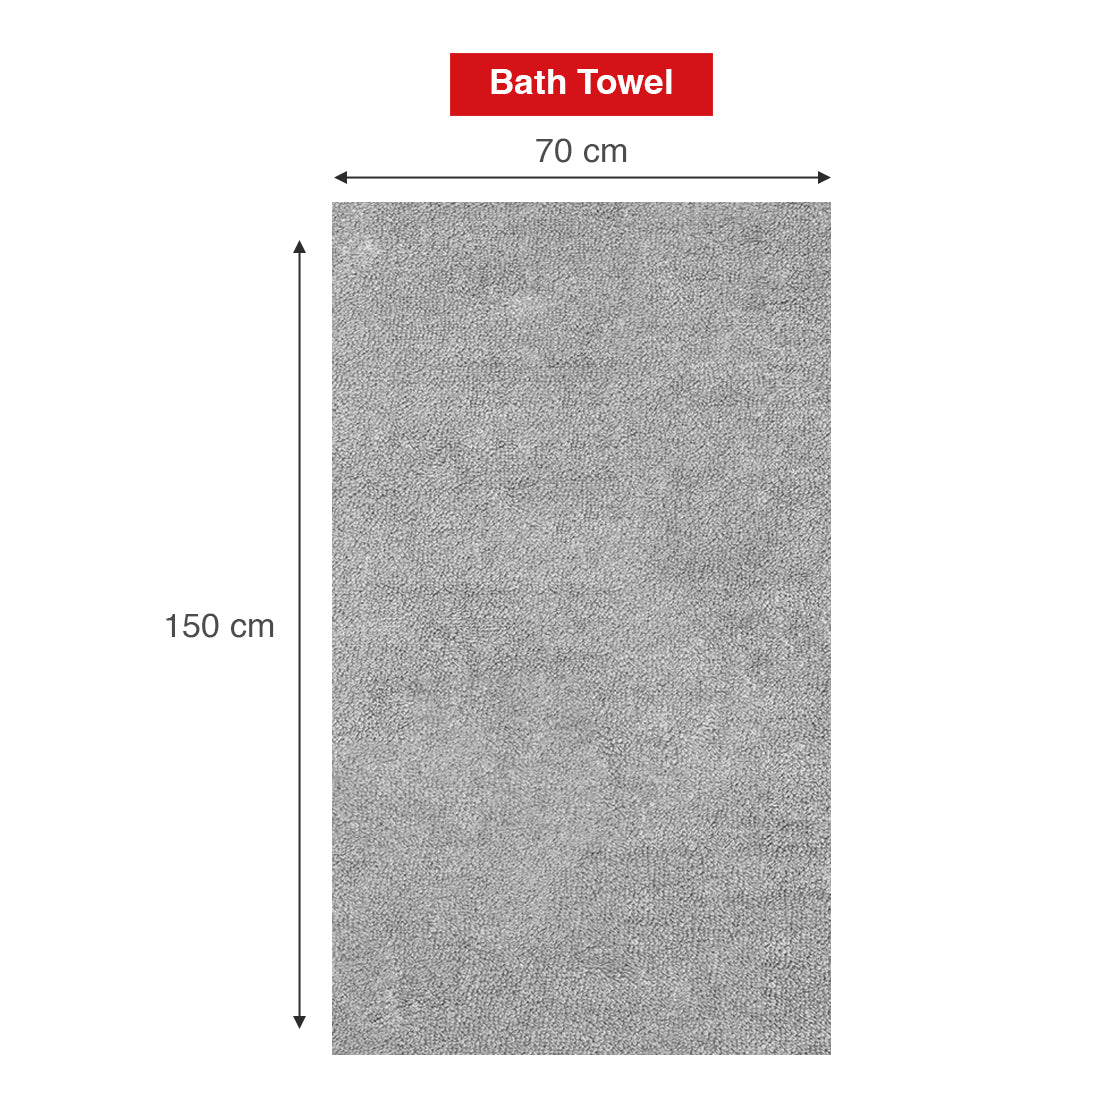 Arias by Lara Dutta Super Soft 500 GSM Cotton Bath Towel 70 x 150 cm (Lavender)